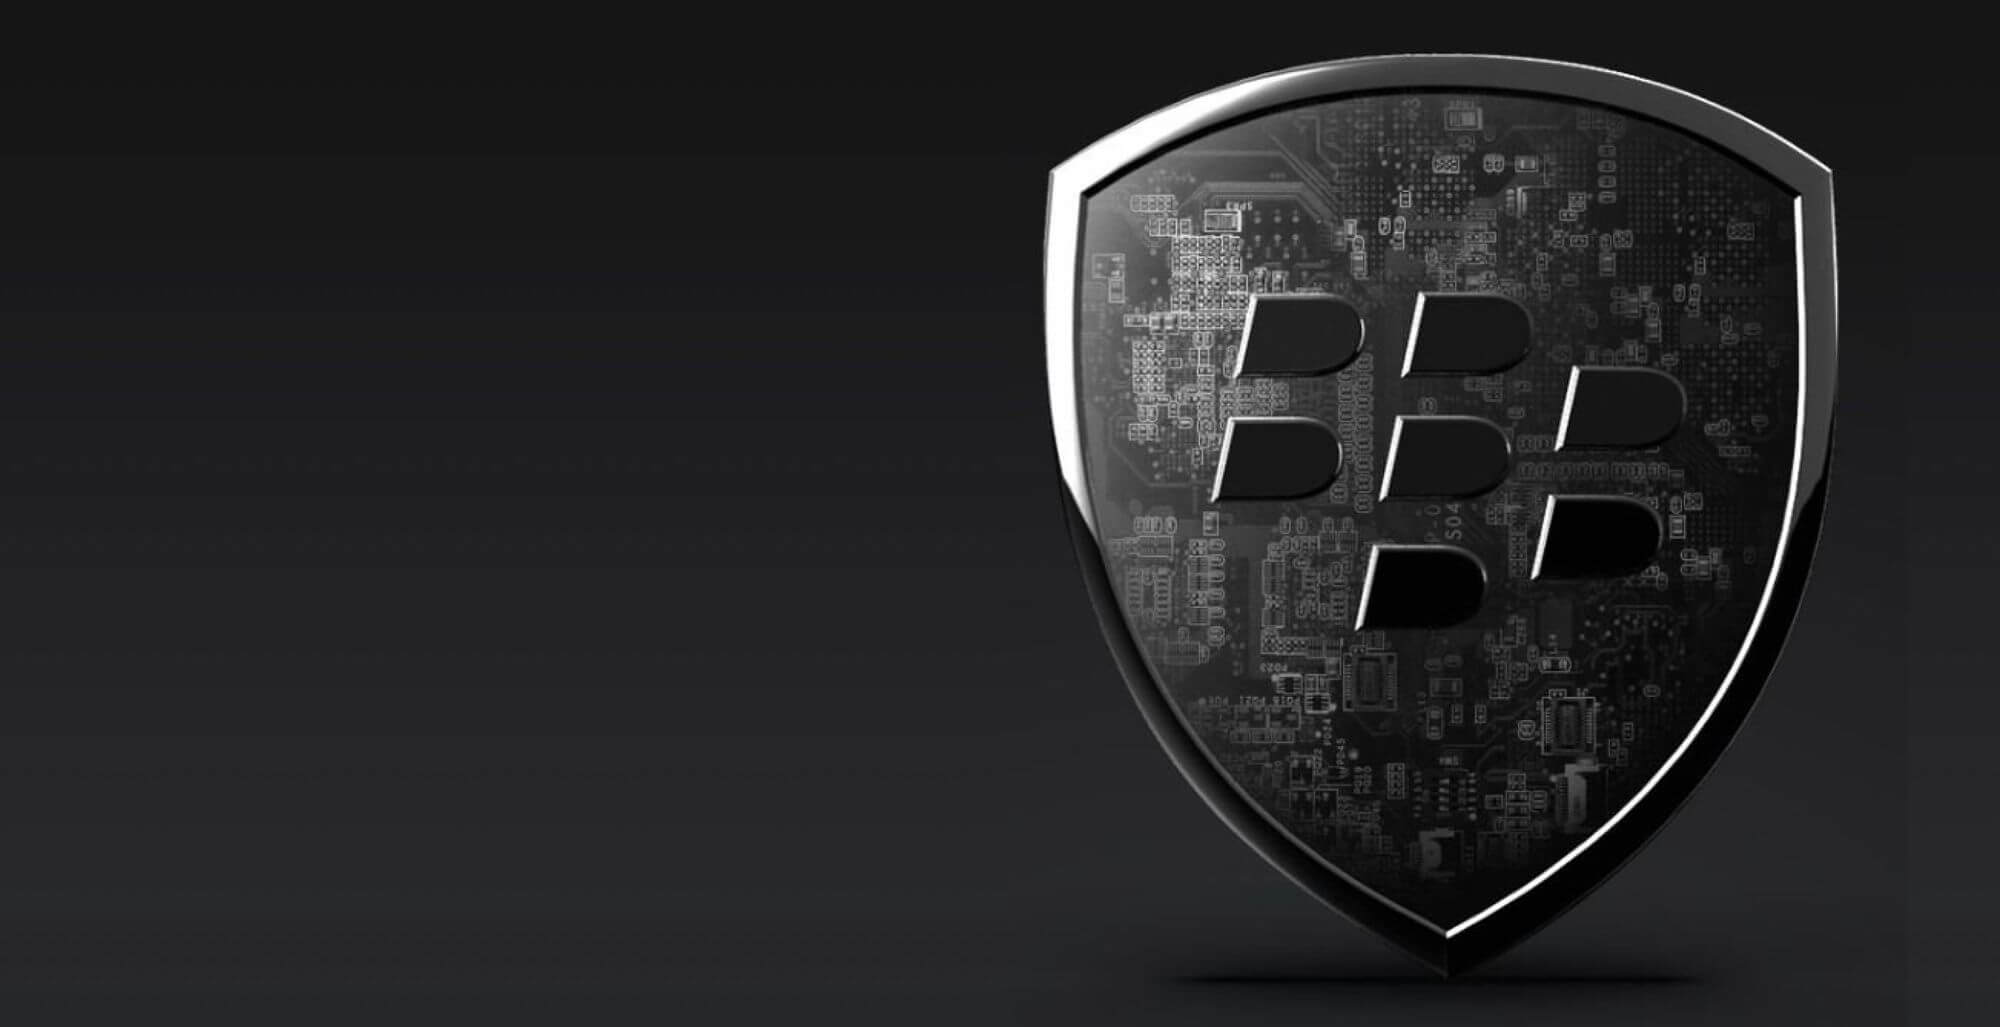  BlackBerry logo on black background.